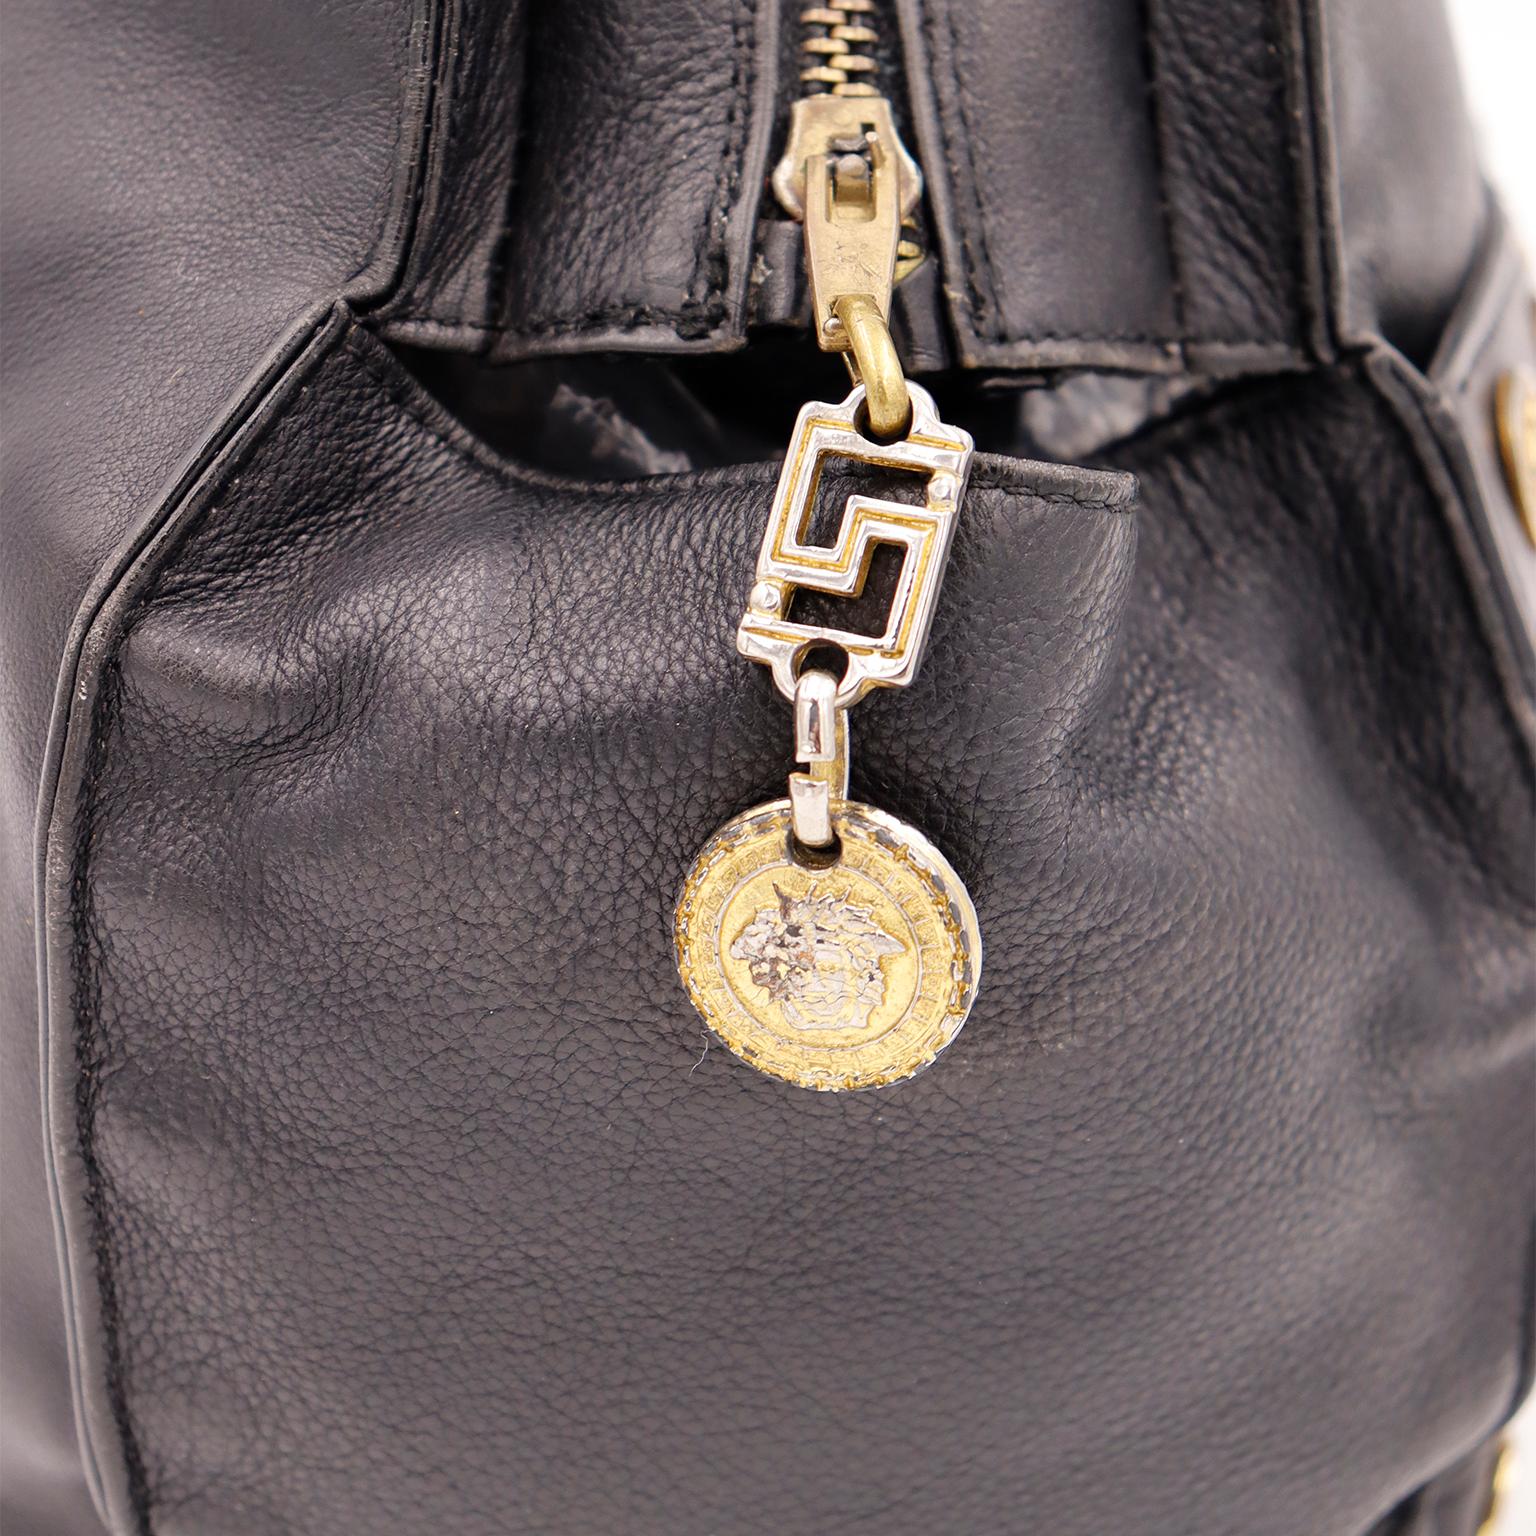 Gianni Versace 1992 Medusa Bondage Black Leather Top Handle Satchel Handbag 3